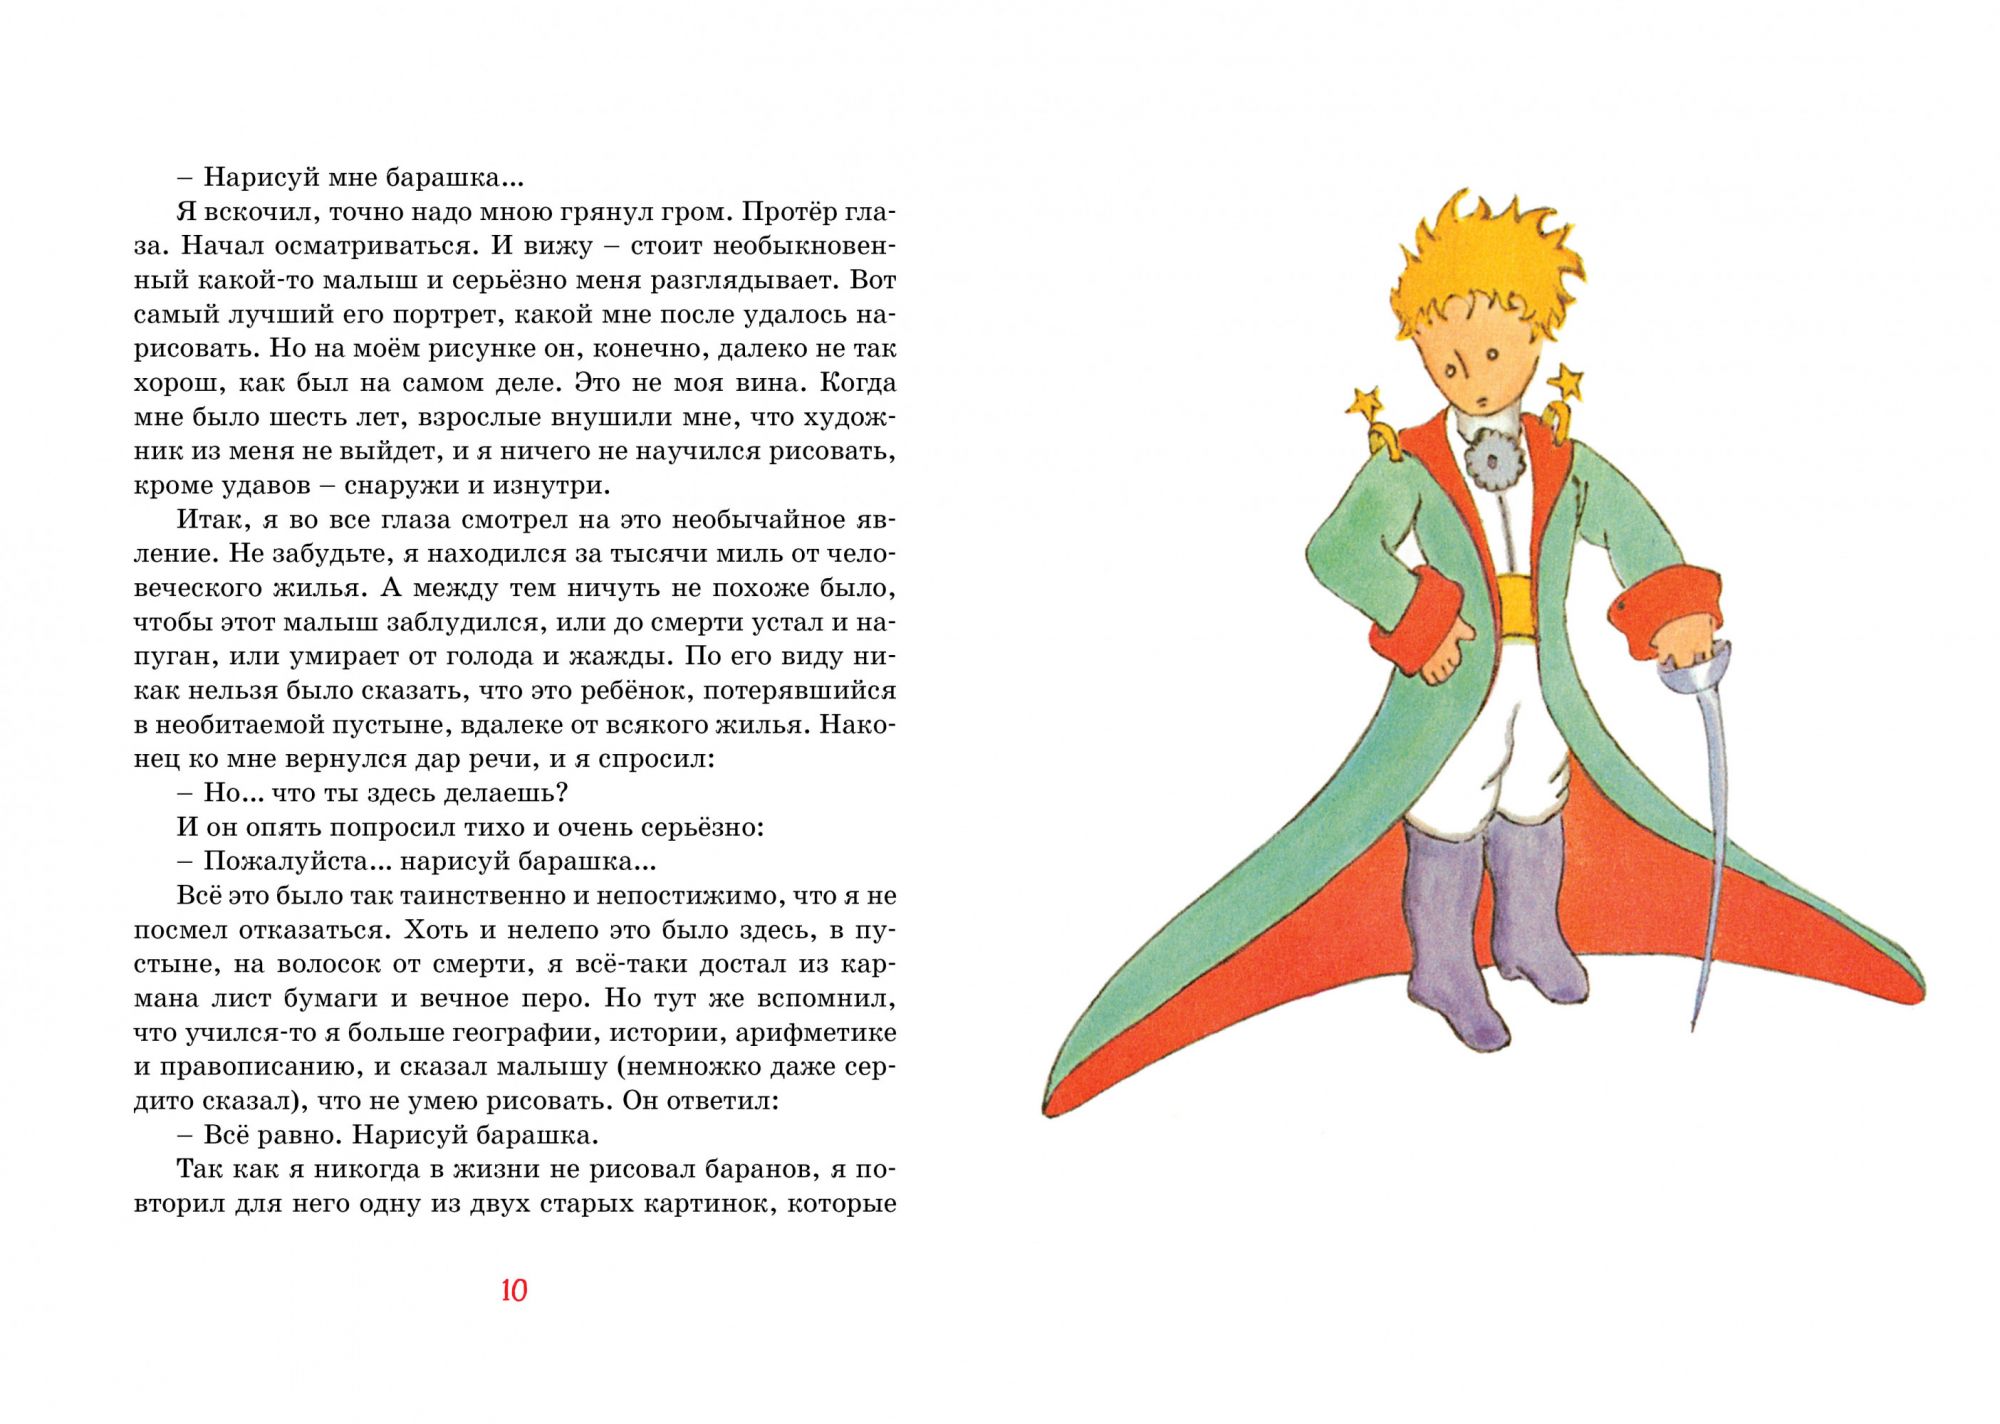 Читать про принца. Антуан де сент-Экзюпери маленький принц. Сент-Экзюпери а. "маленький принц". Сент-Экзюпери маленький принц книга. Произведение маленький принц.